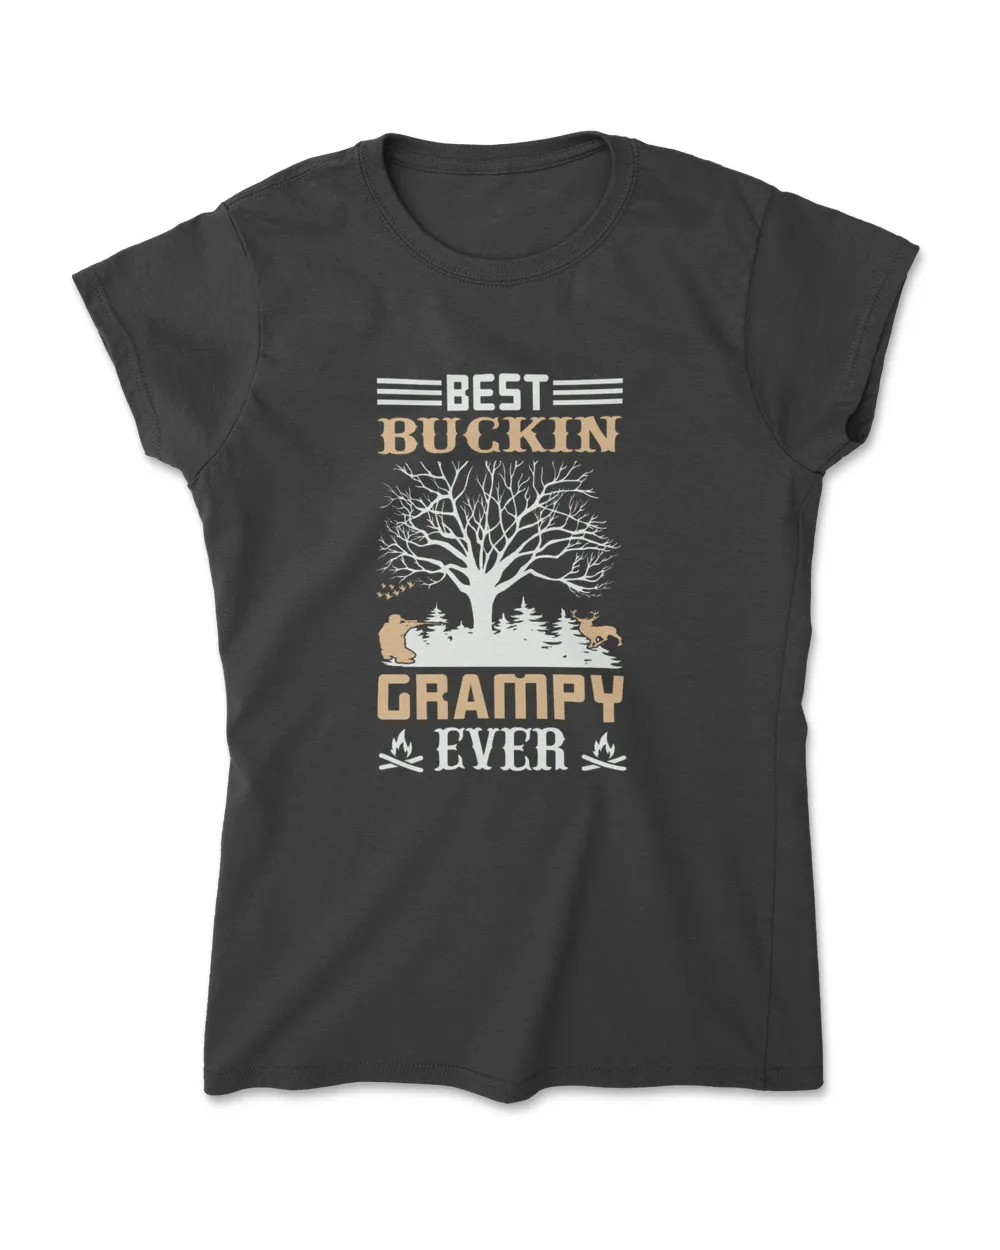 [Hunting] Best Buckin Grampy Ever